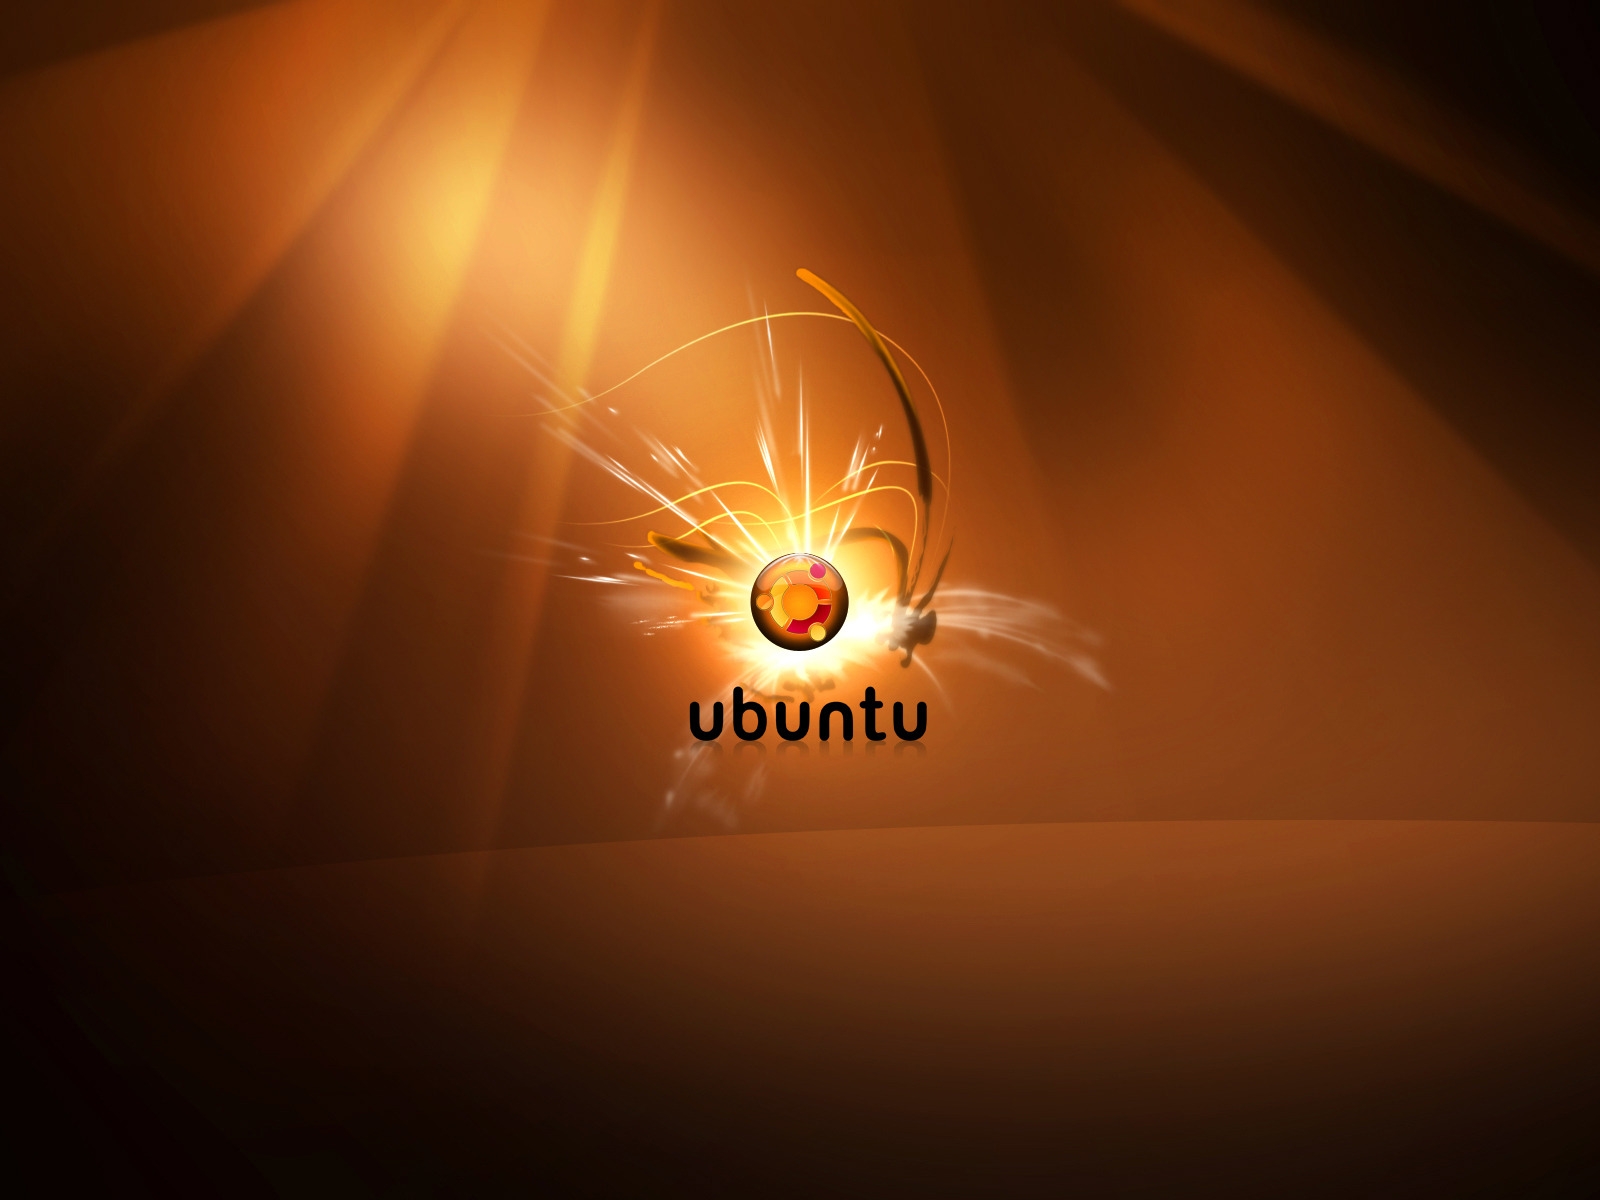 Creative Ubuntu Design for 1600 x 1200 resolution